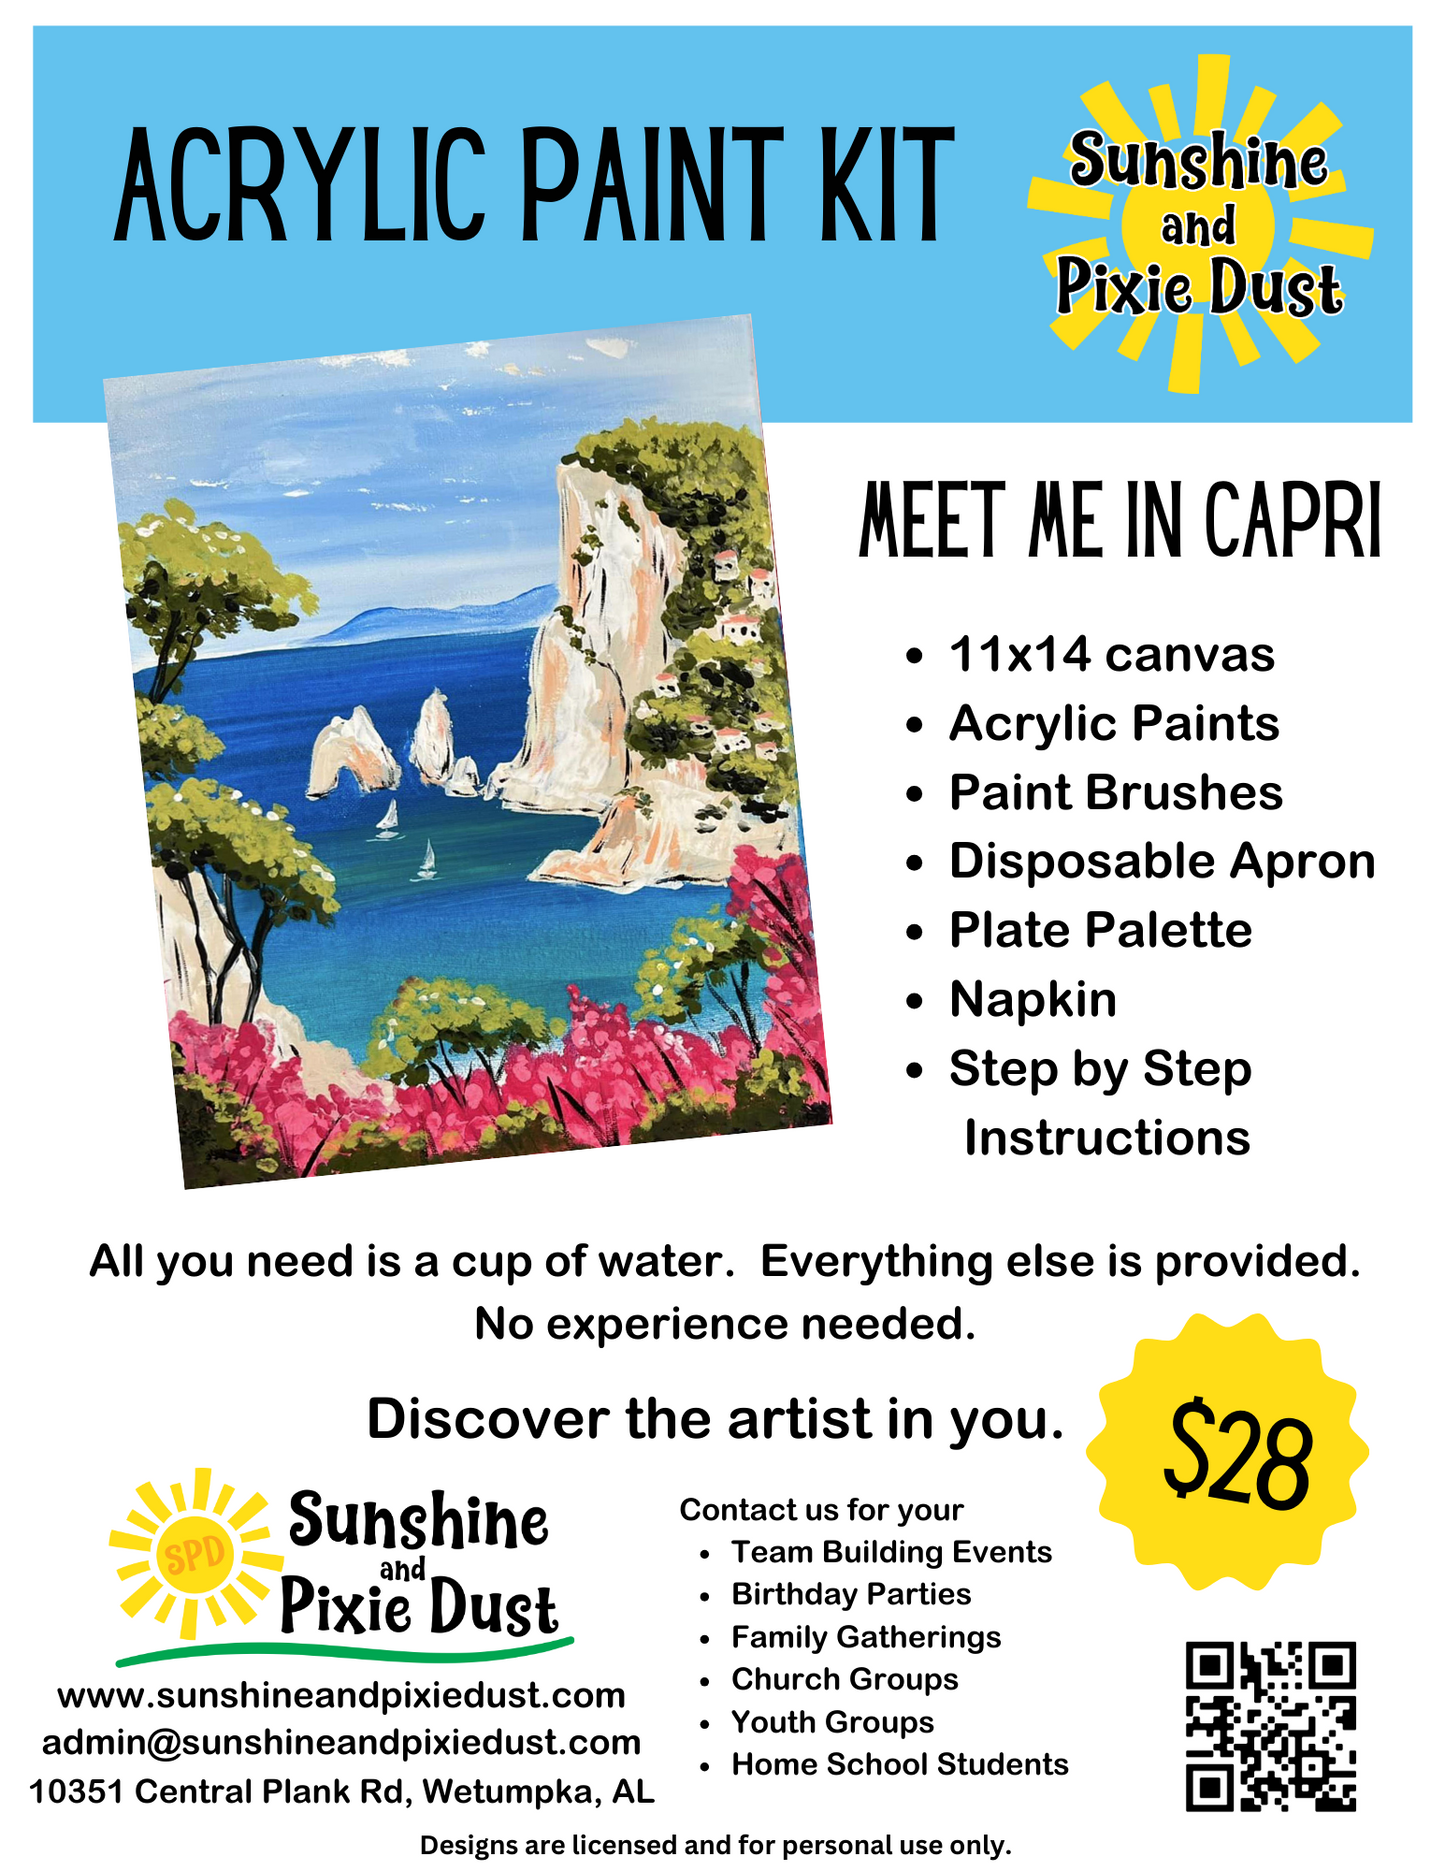 Meet Me in Capri Acrylic Paint Kit